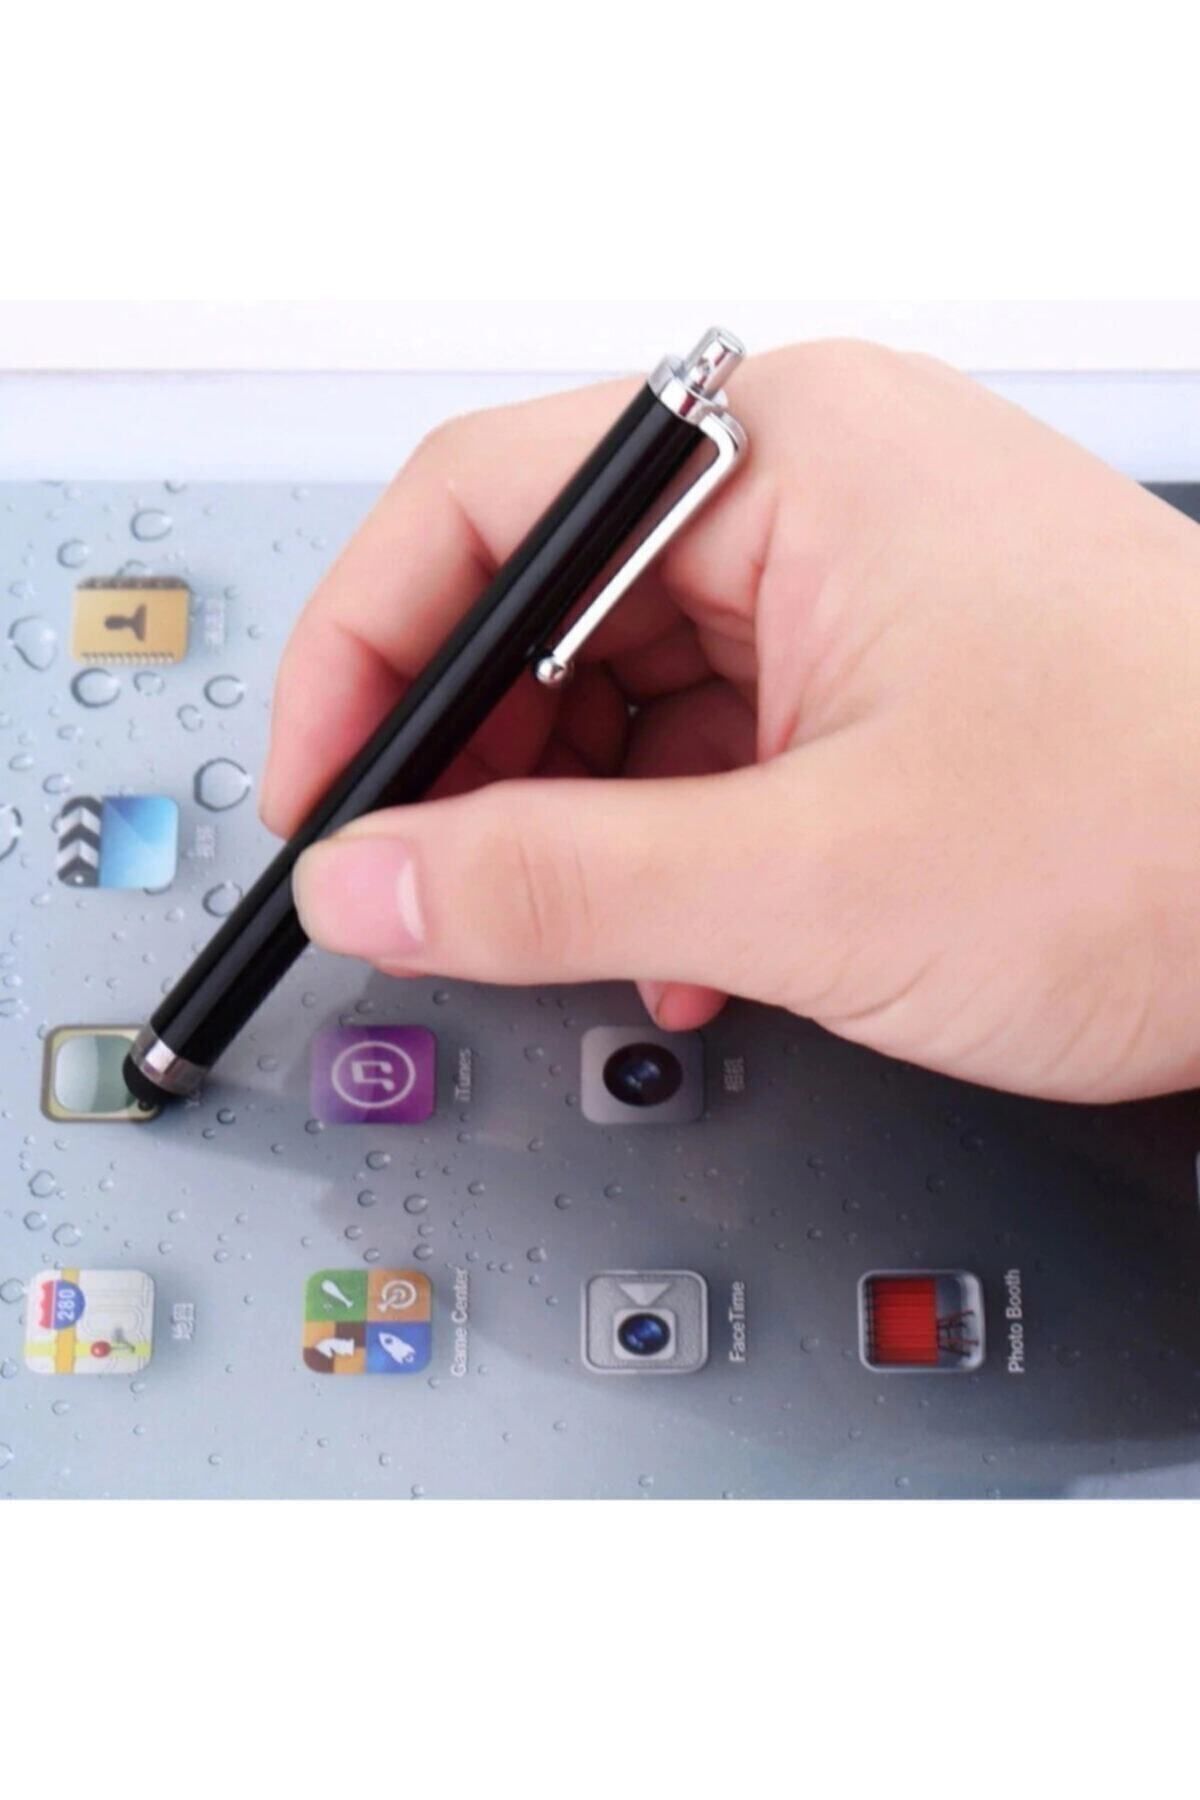 Redclick Dokunmatik Kalem - Akıllı Tahta & Tablet & Telefonlar Için Kalem